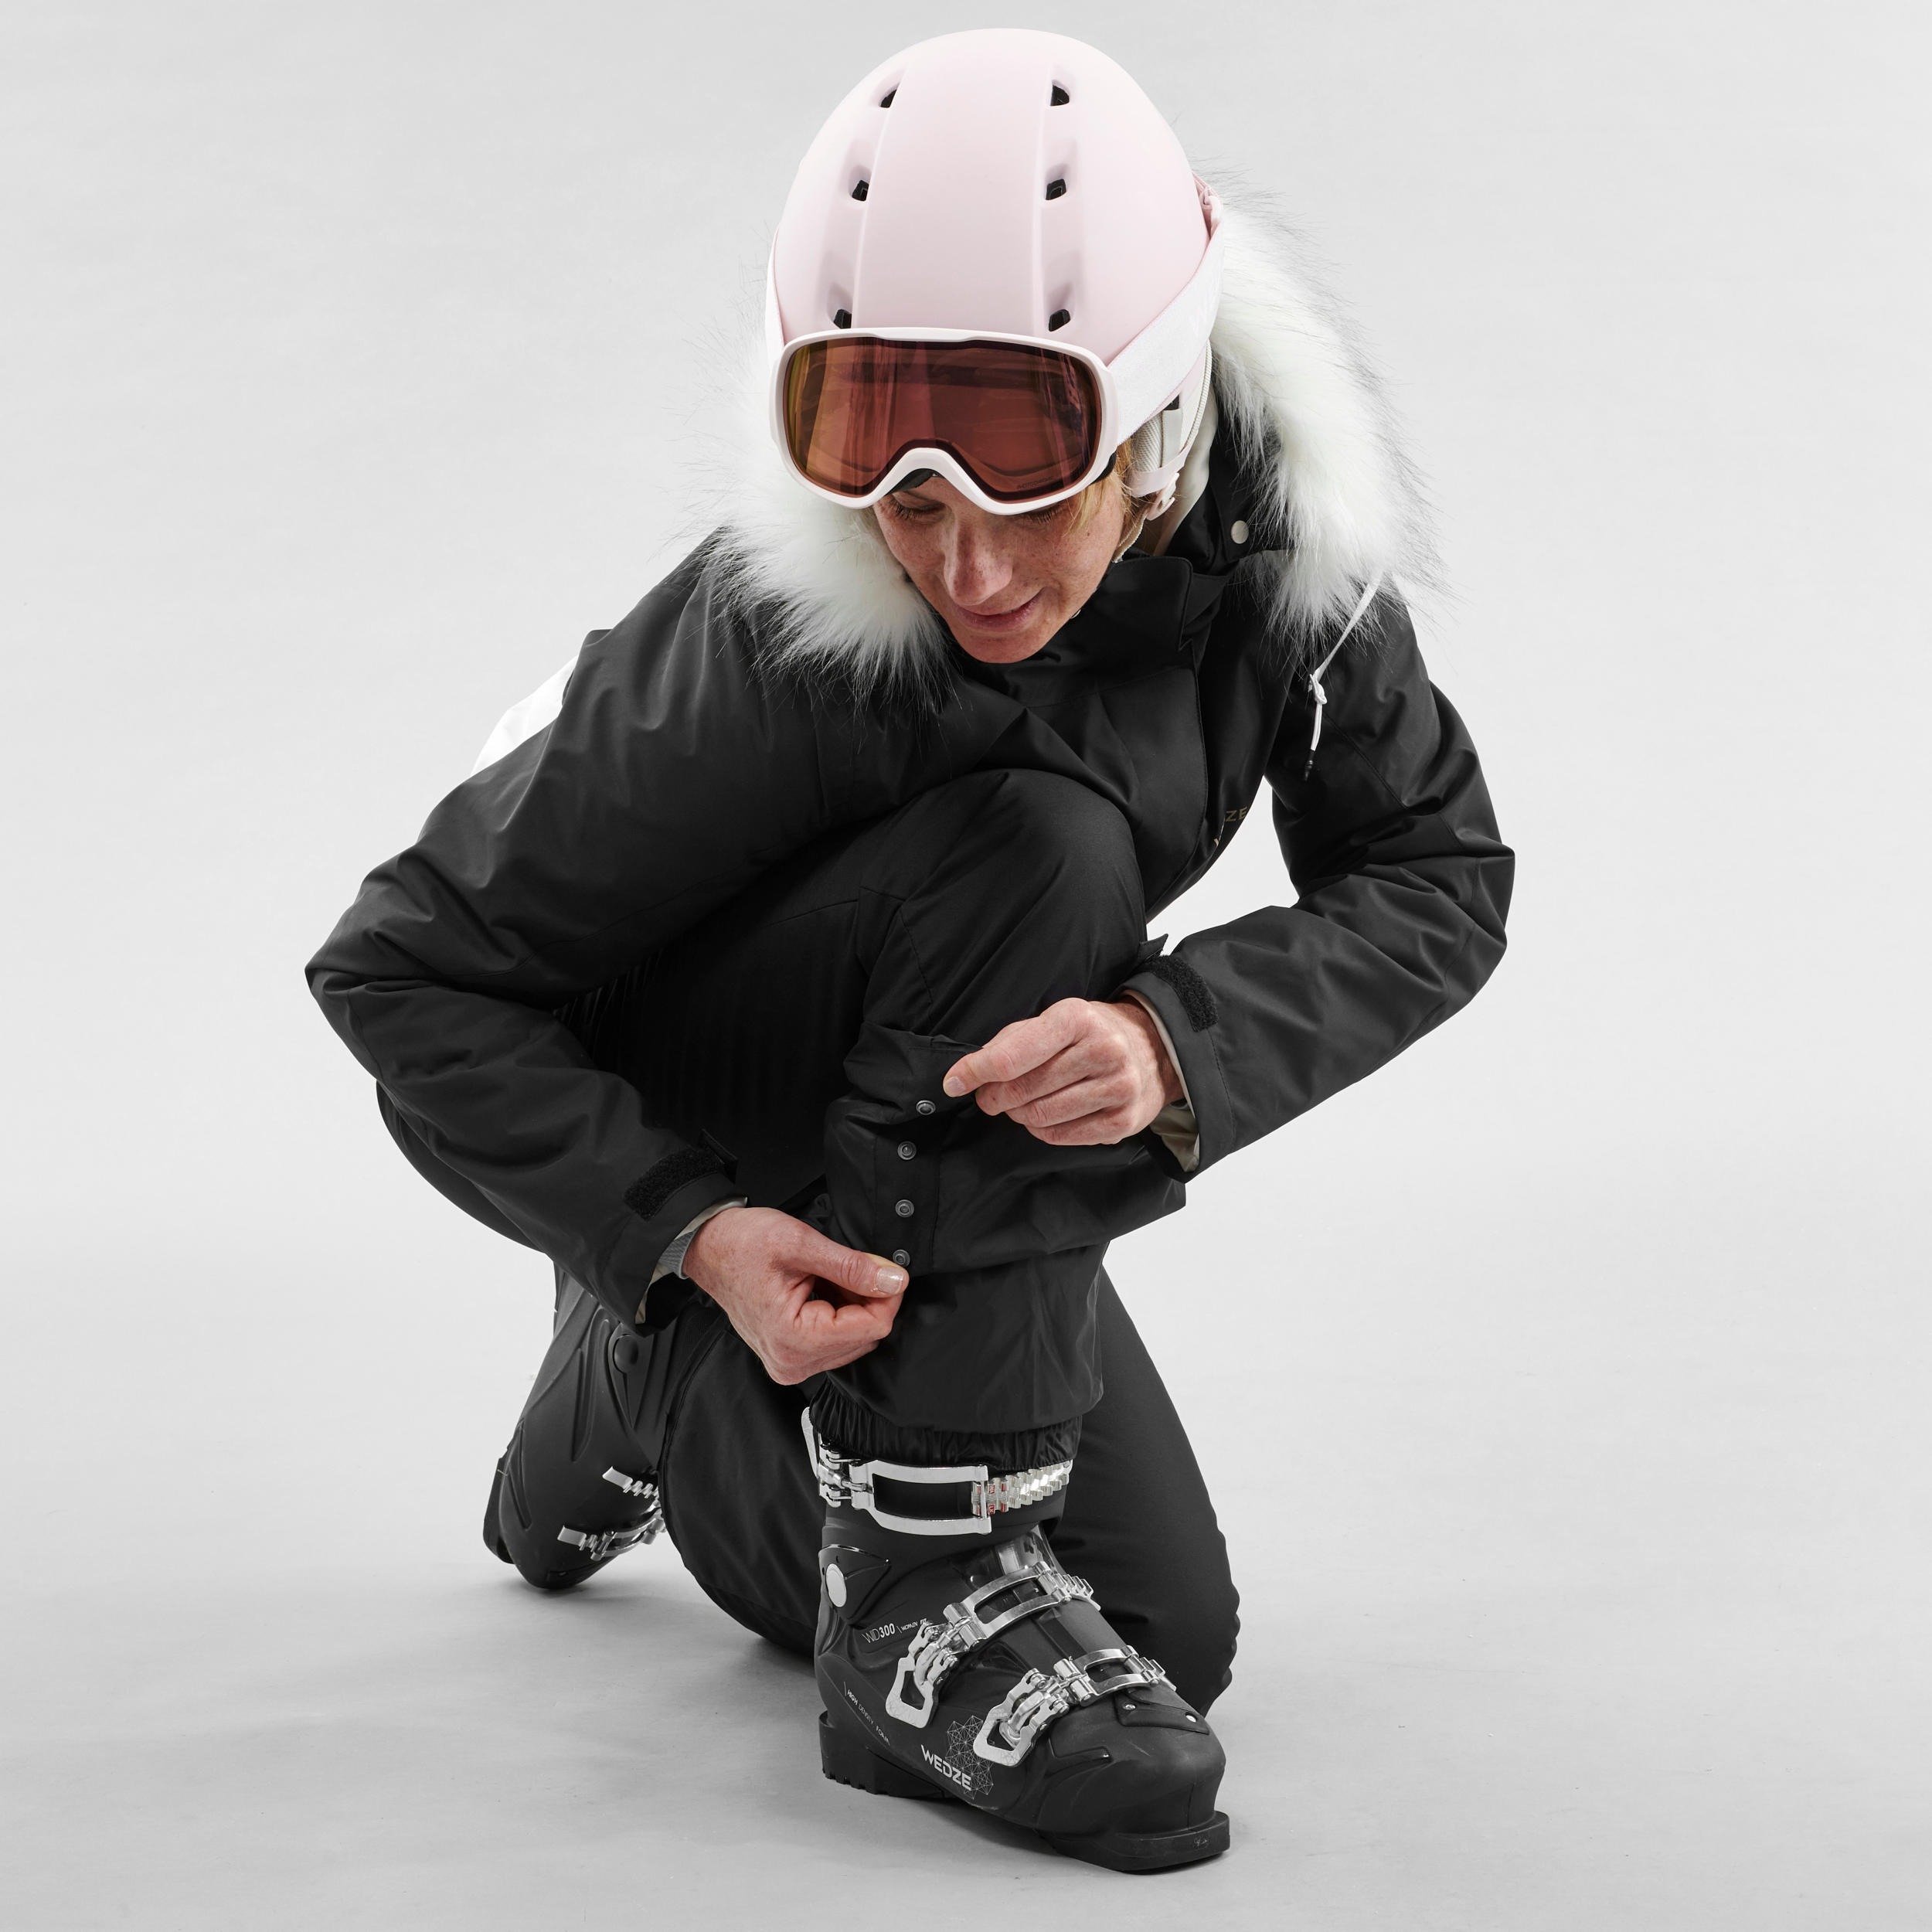 Pantalon d'hiver femme – ski 180 noir - WEDZE